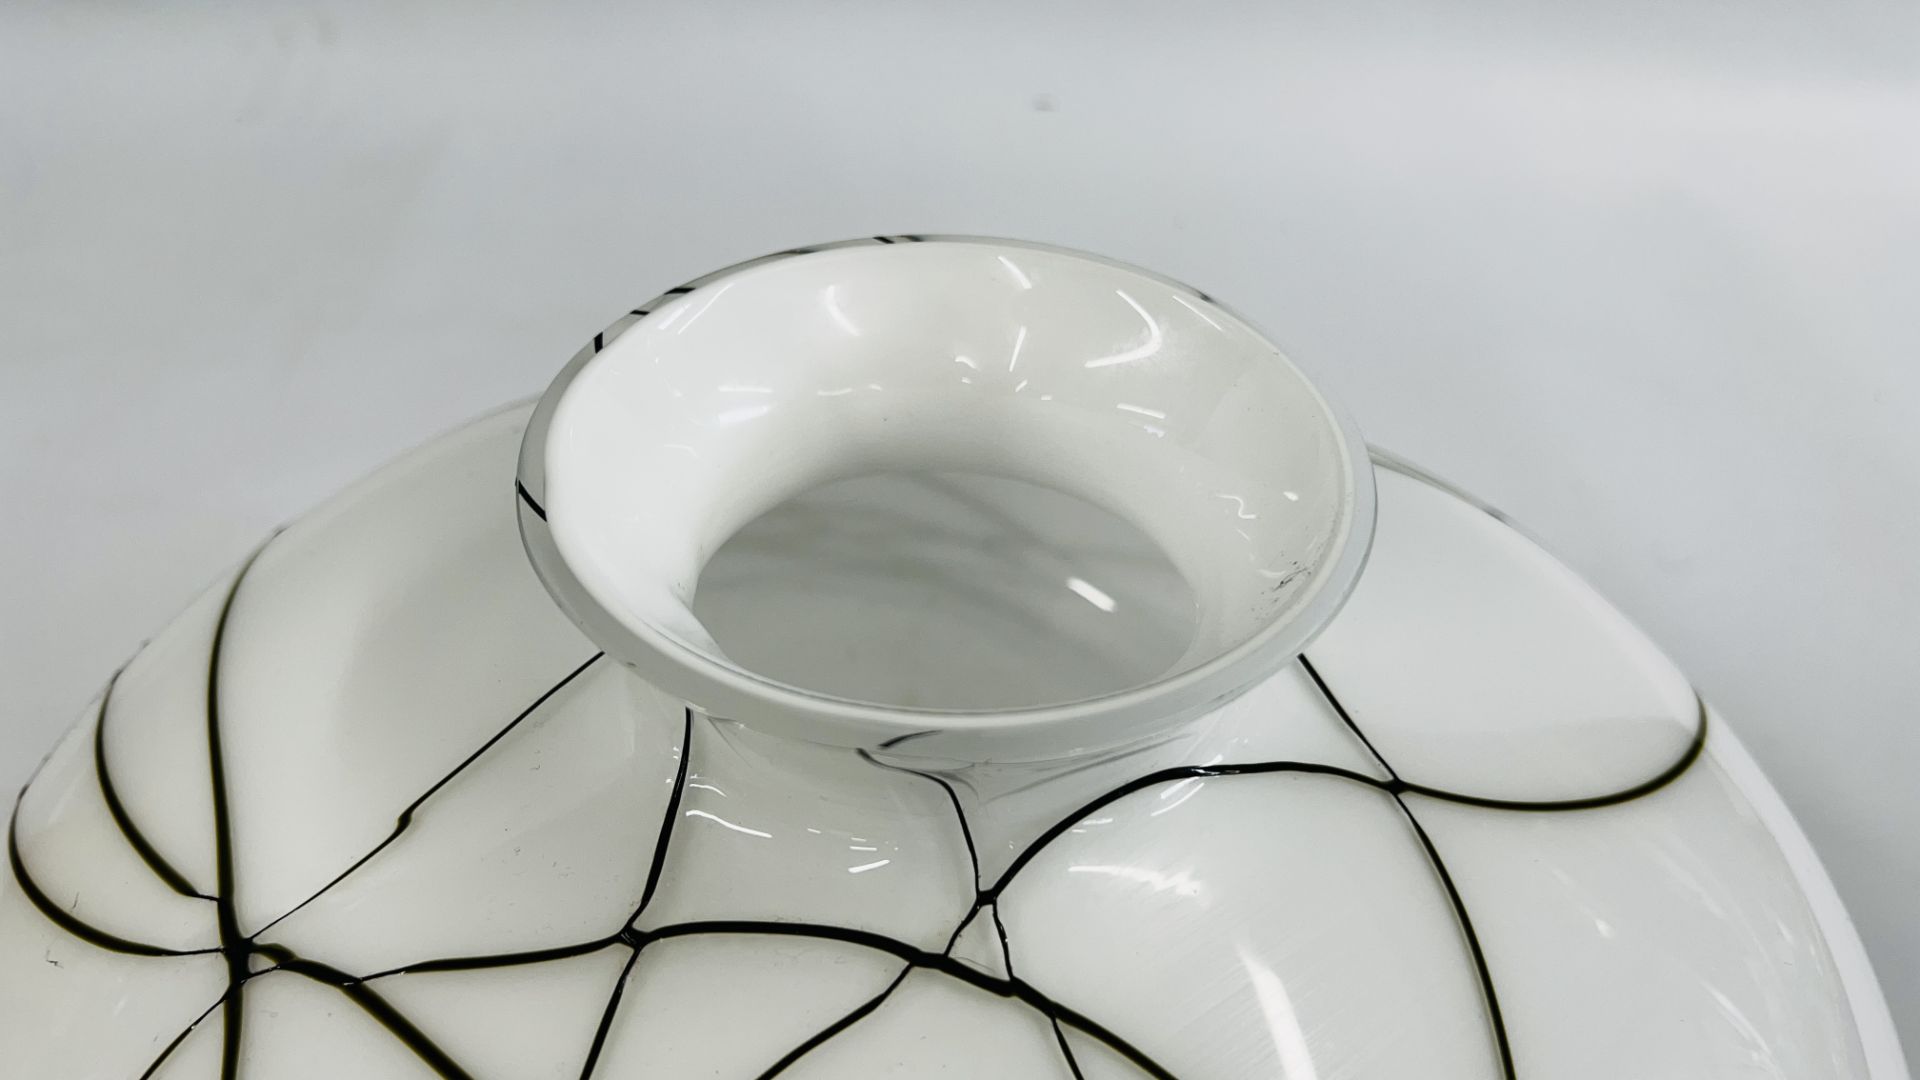 A DESIGNER WHITE AND BLACK GLASS VASE, DIAMETER 32CM. - Image 2 of 3